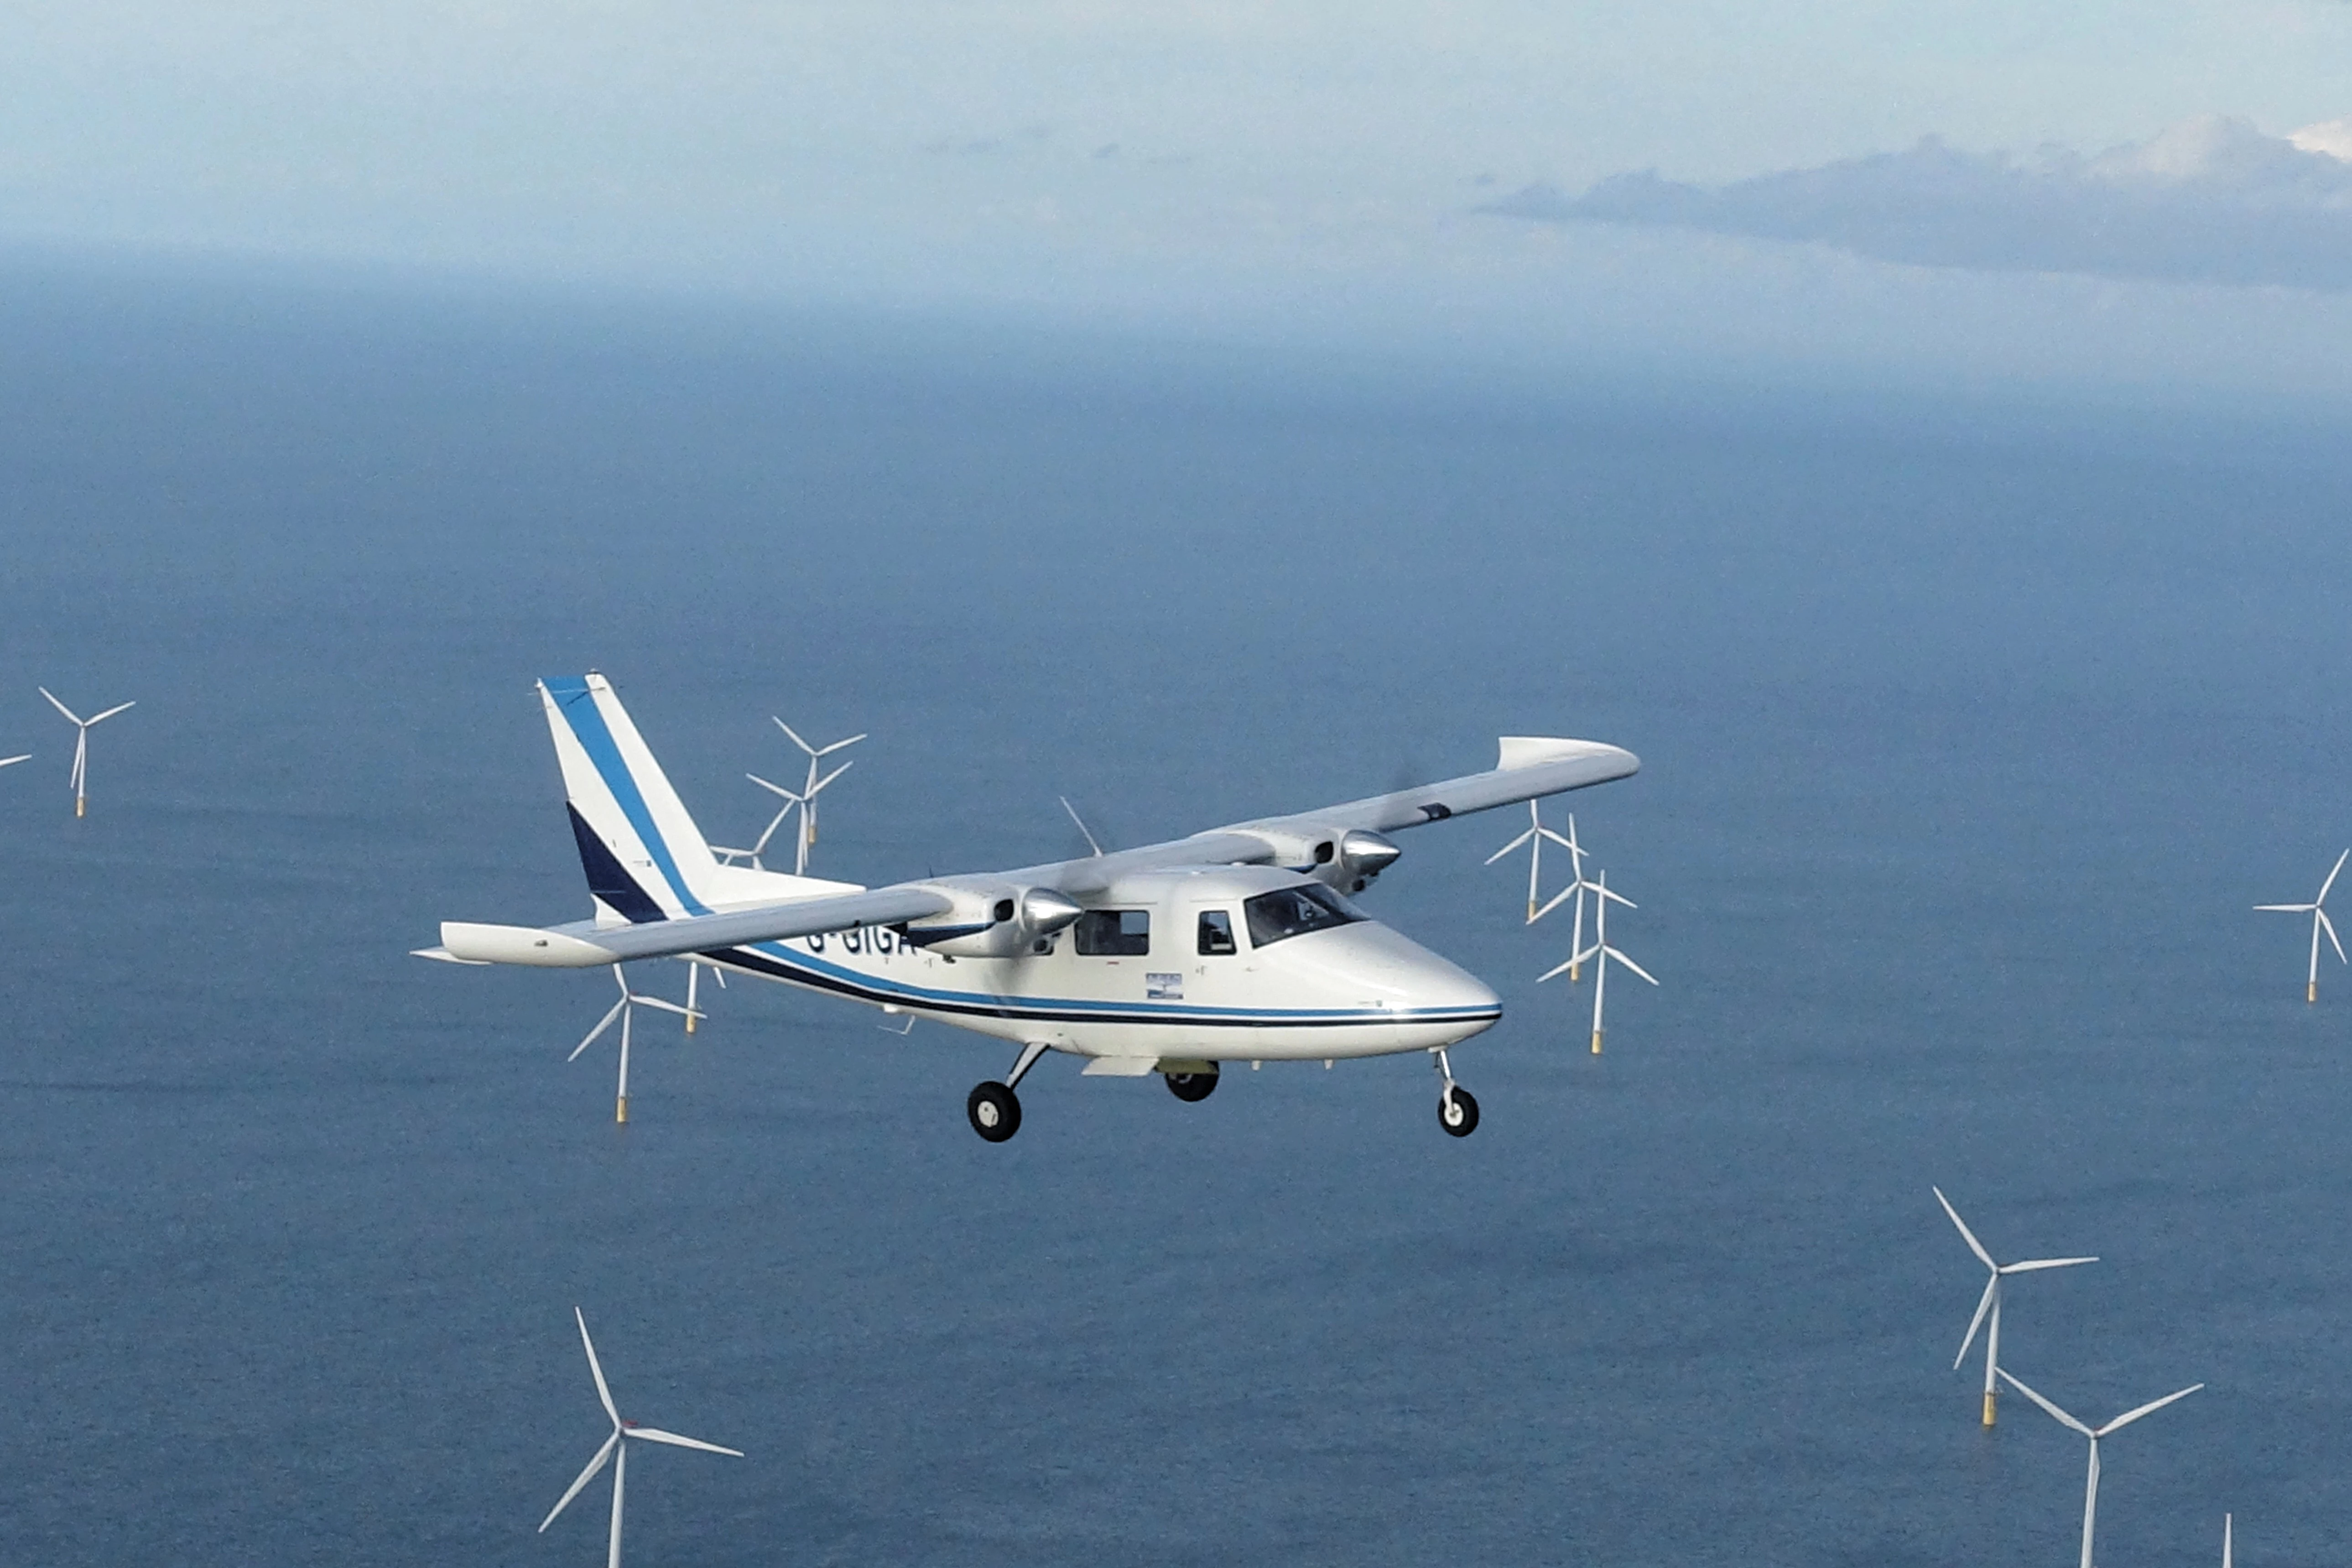 APEM aircraft above wind farm